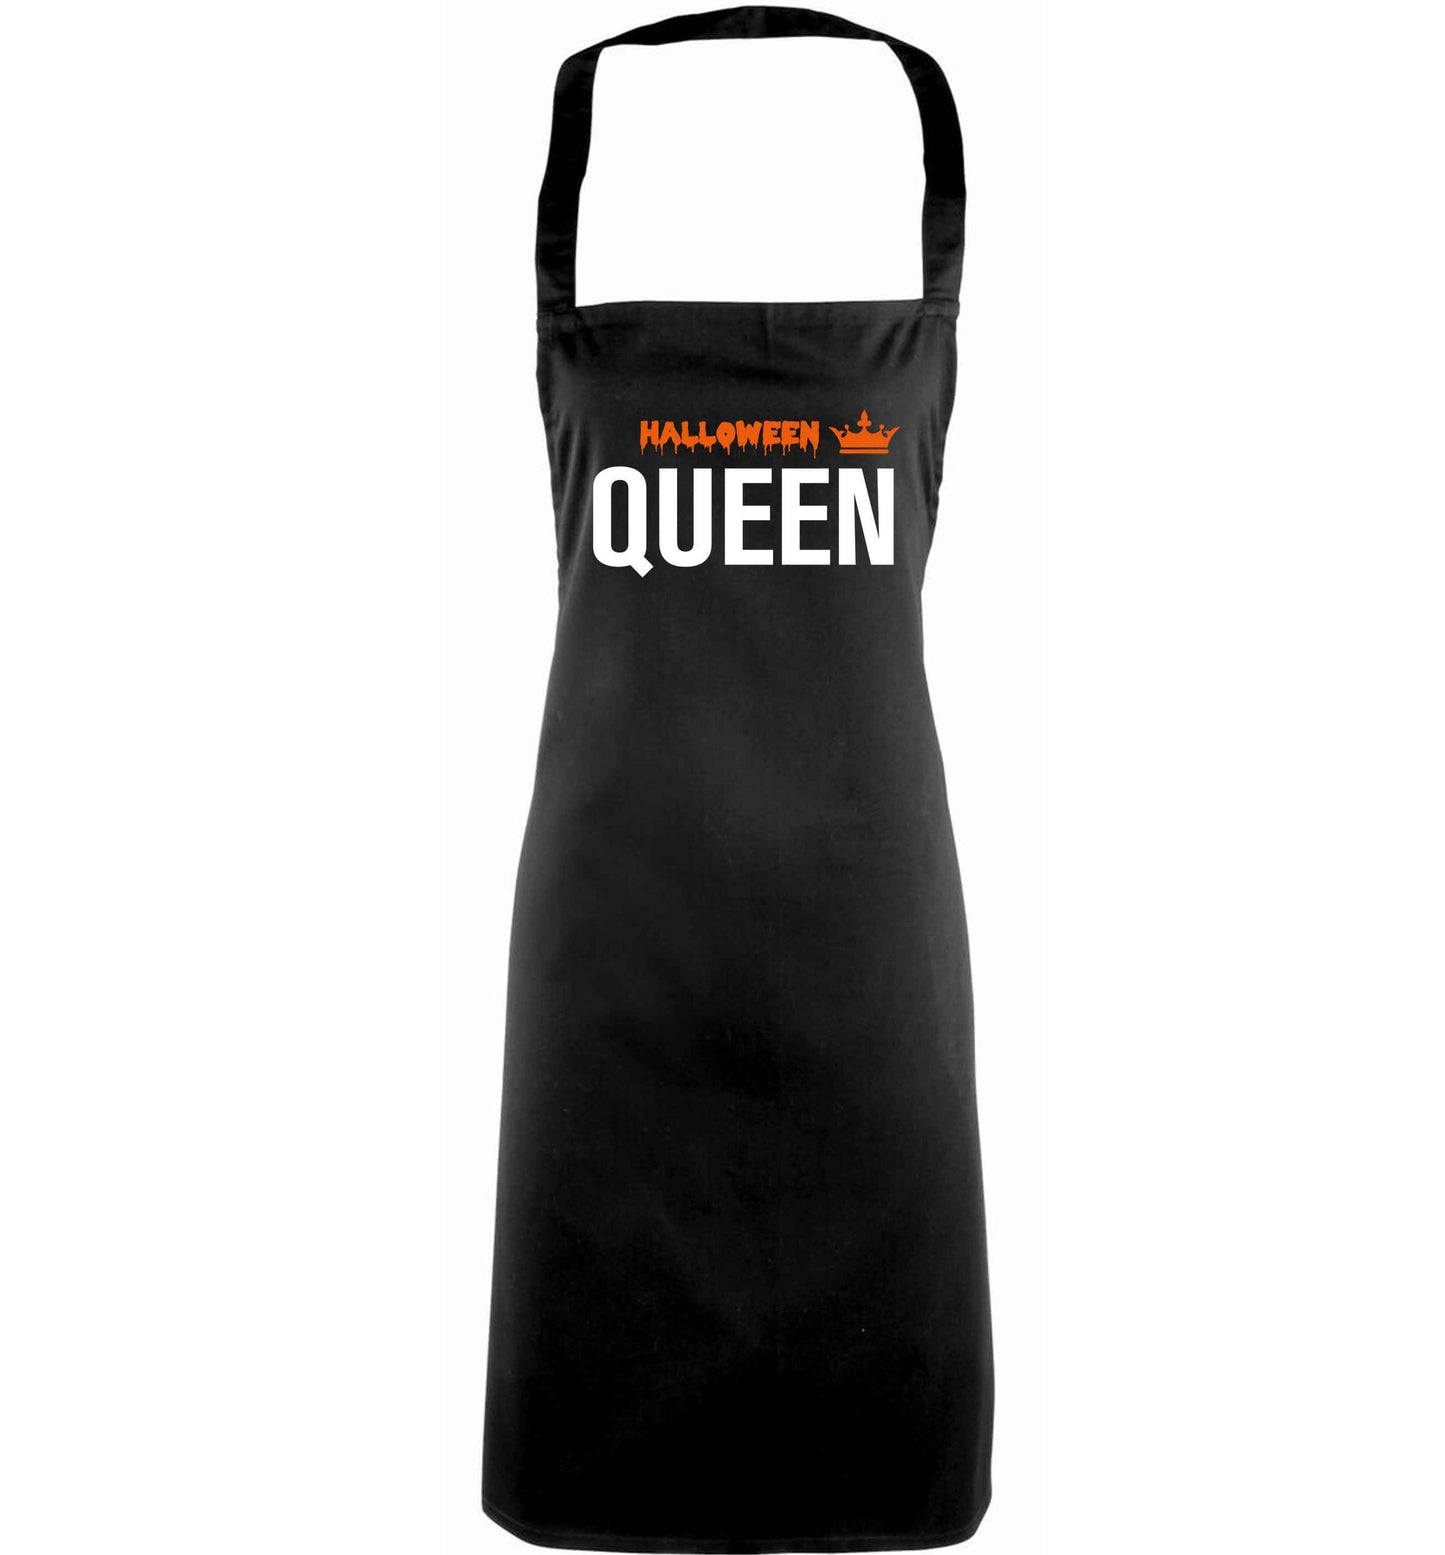 Halloween queen adults black apron